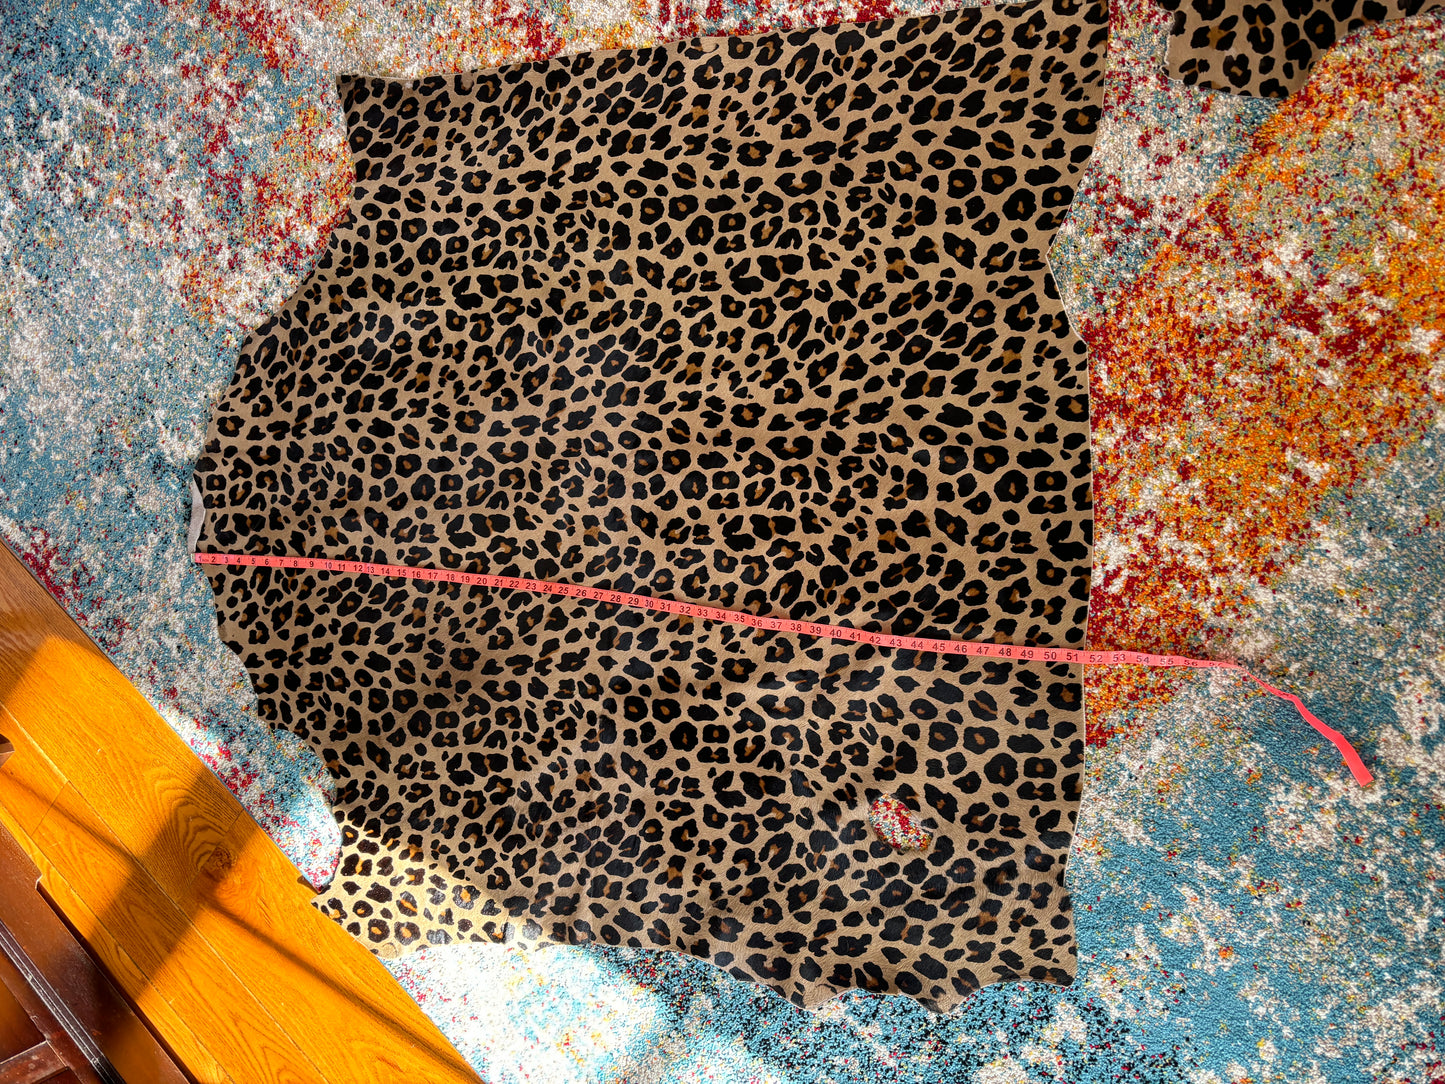 Cheetah Print Cowhide, High Quality Remnants Originally Used to make Purses